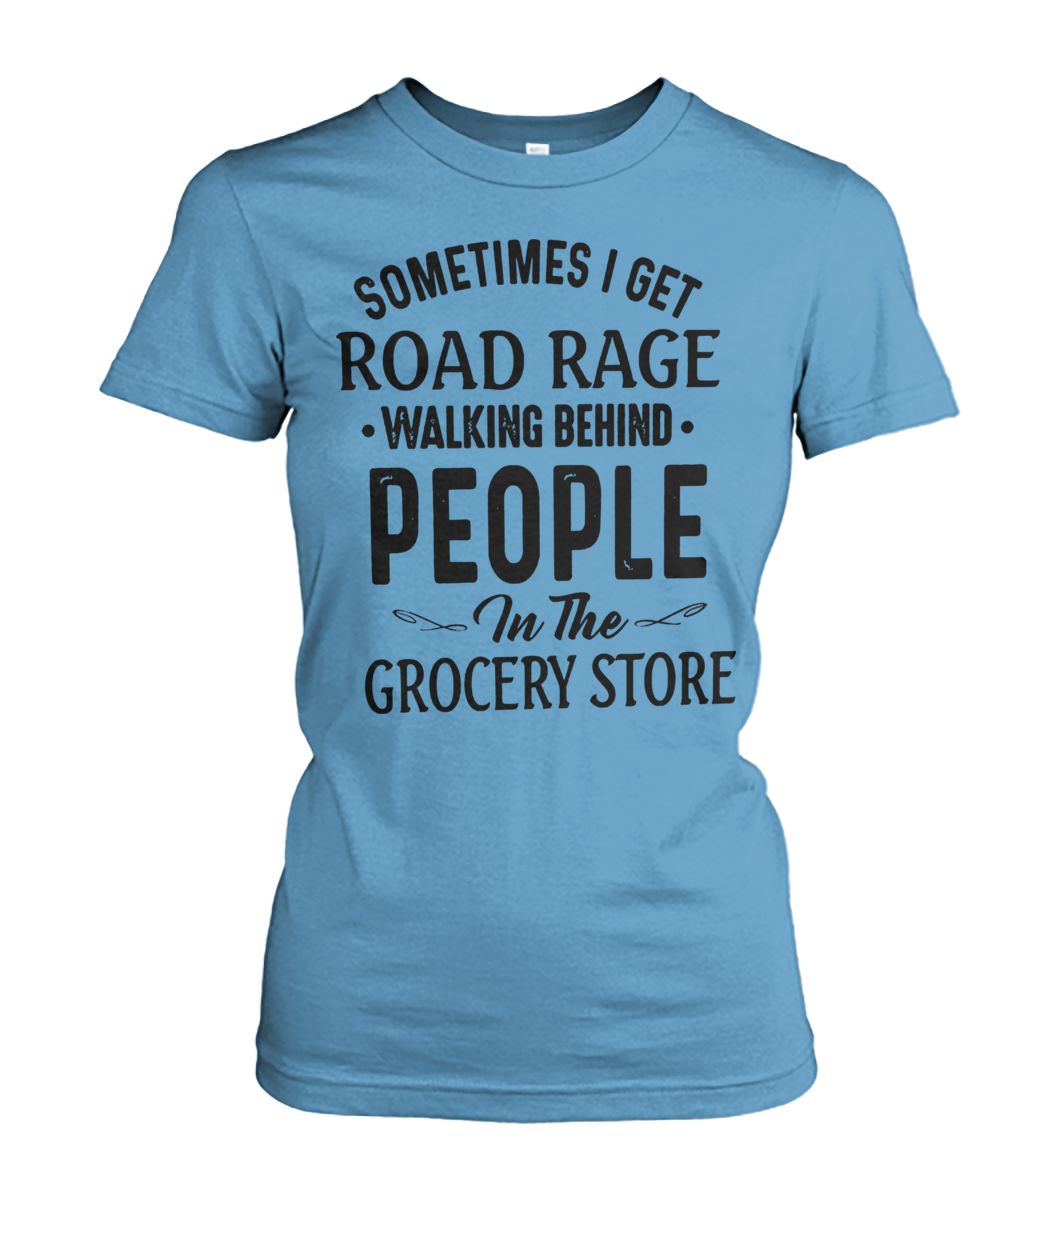 Sometimes I get road rage walking behind people in the grocery store women's crew tee